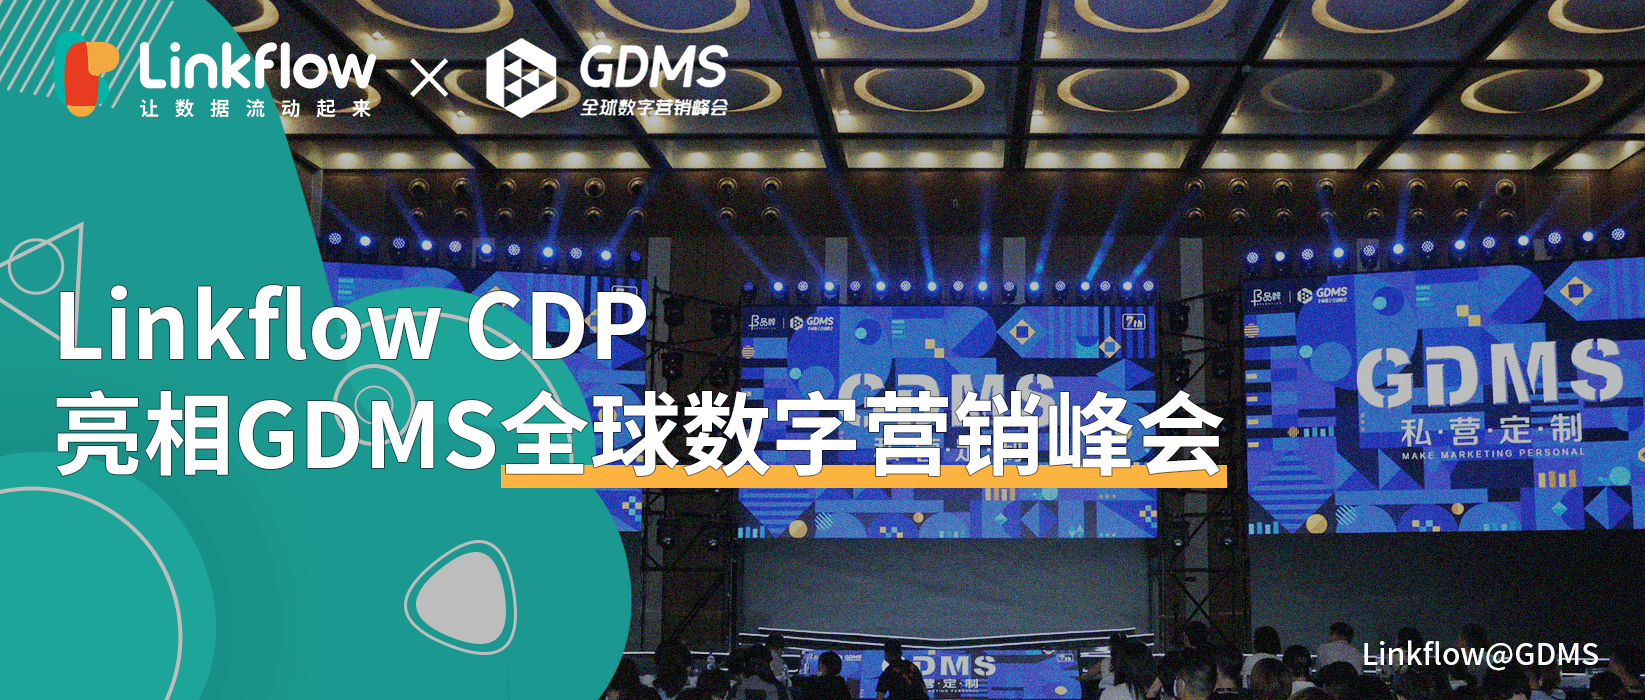 Linkflow CDP亮相GDMS全球数字营销峰会